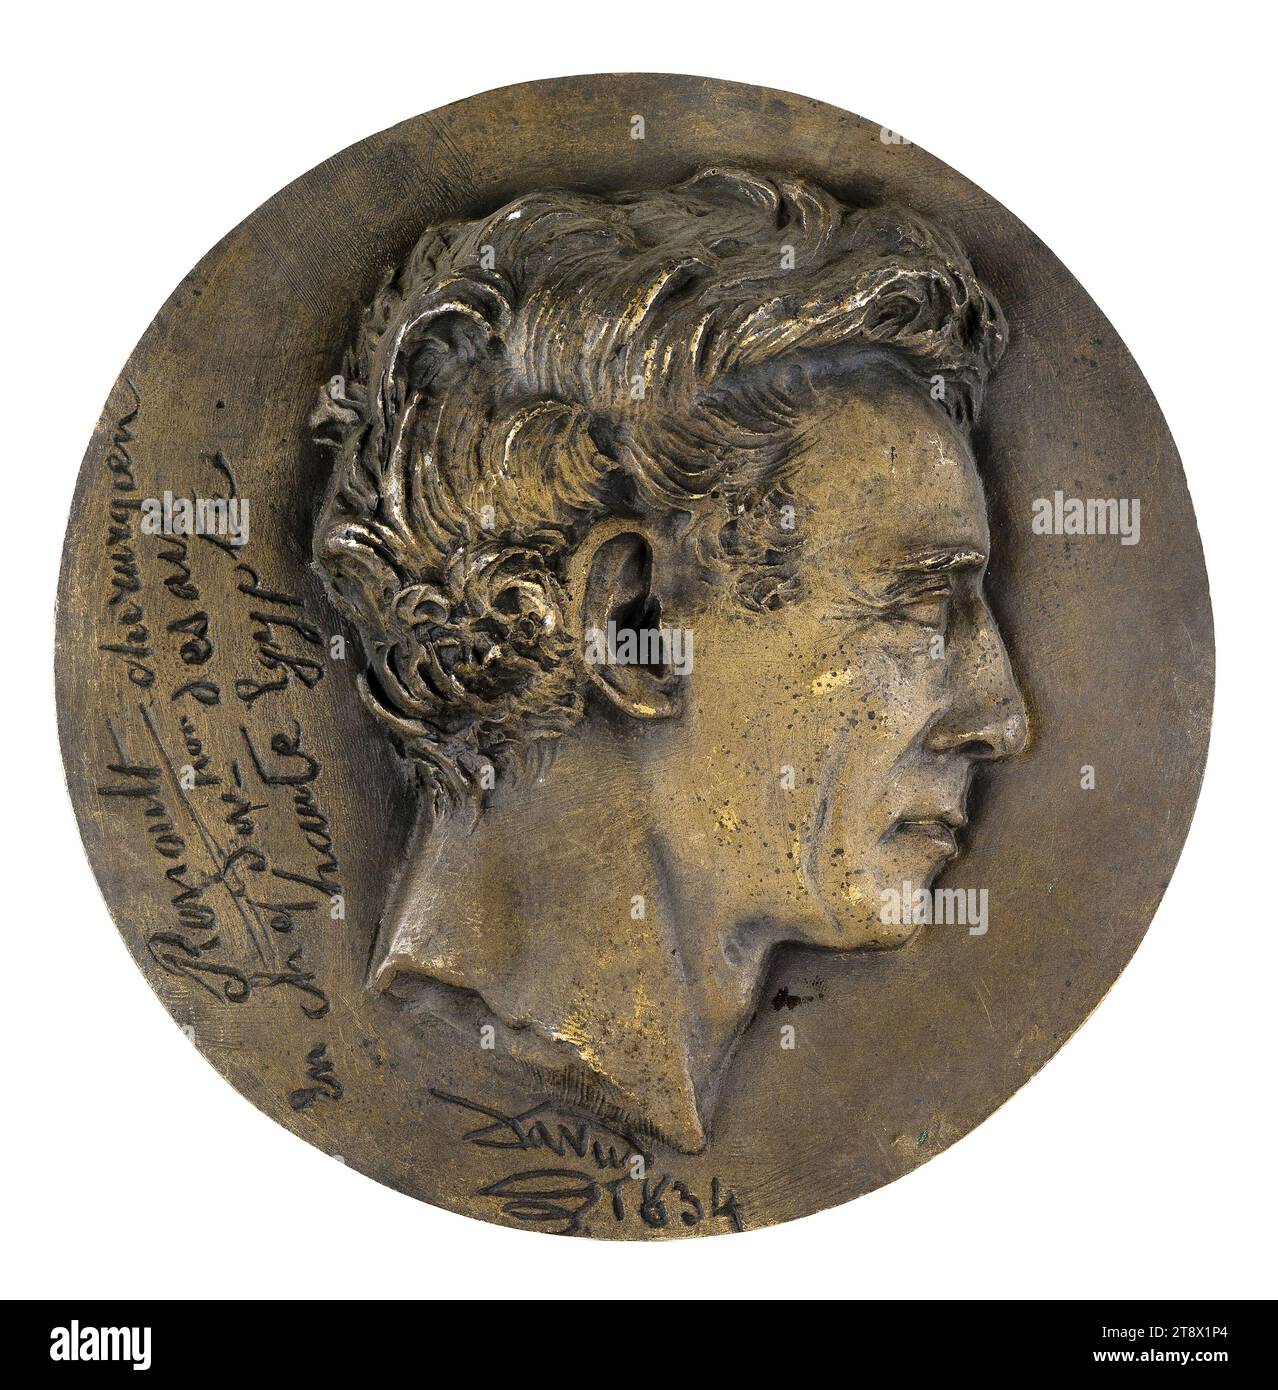 Portrait of Renoult, Egyptian Army Surgeon, David d'Angers, Pierre-Jean, Sculptor, In 1834, 19th century, Sculpture, Medallion (sculpture), Dimensions - Work: Diameter: 16.7 cm Stock Photo